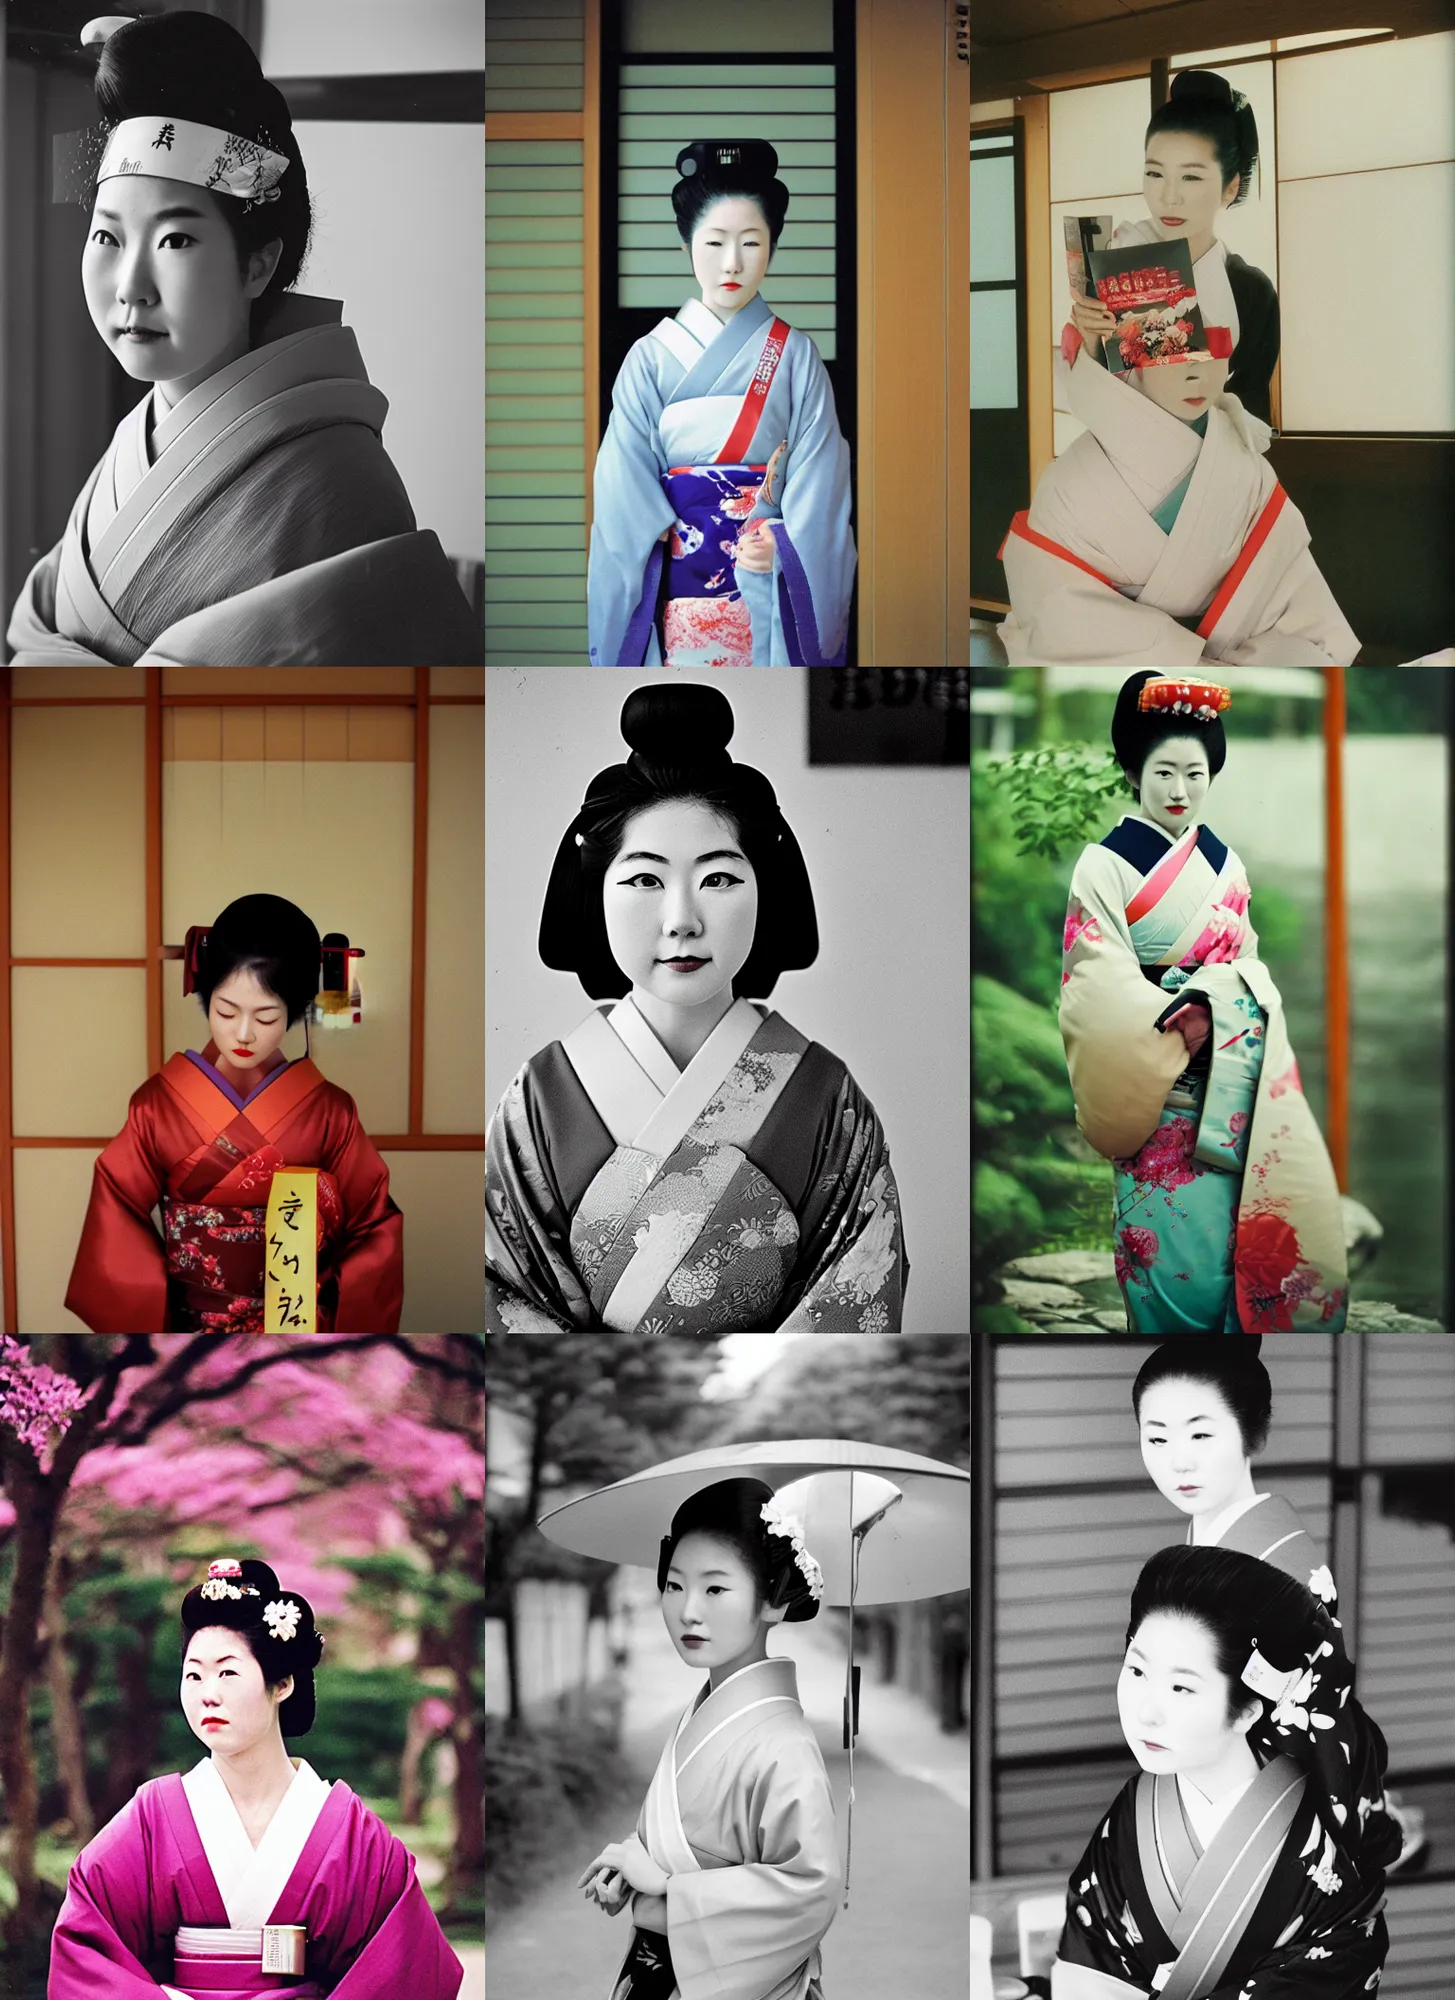 Prompt: Portrait Photograph of a Japanese Geisha Revolog Plexus 400